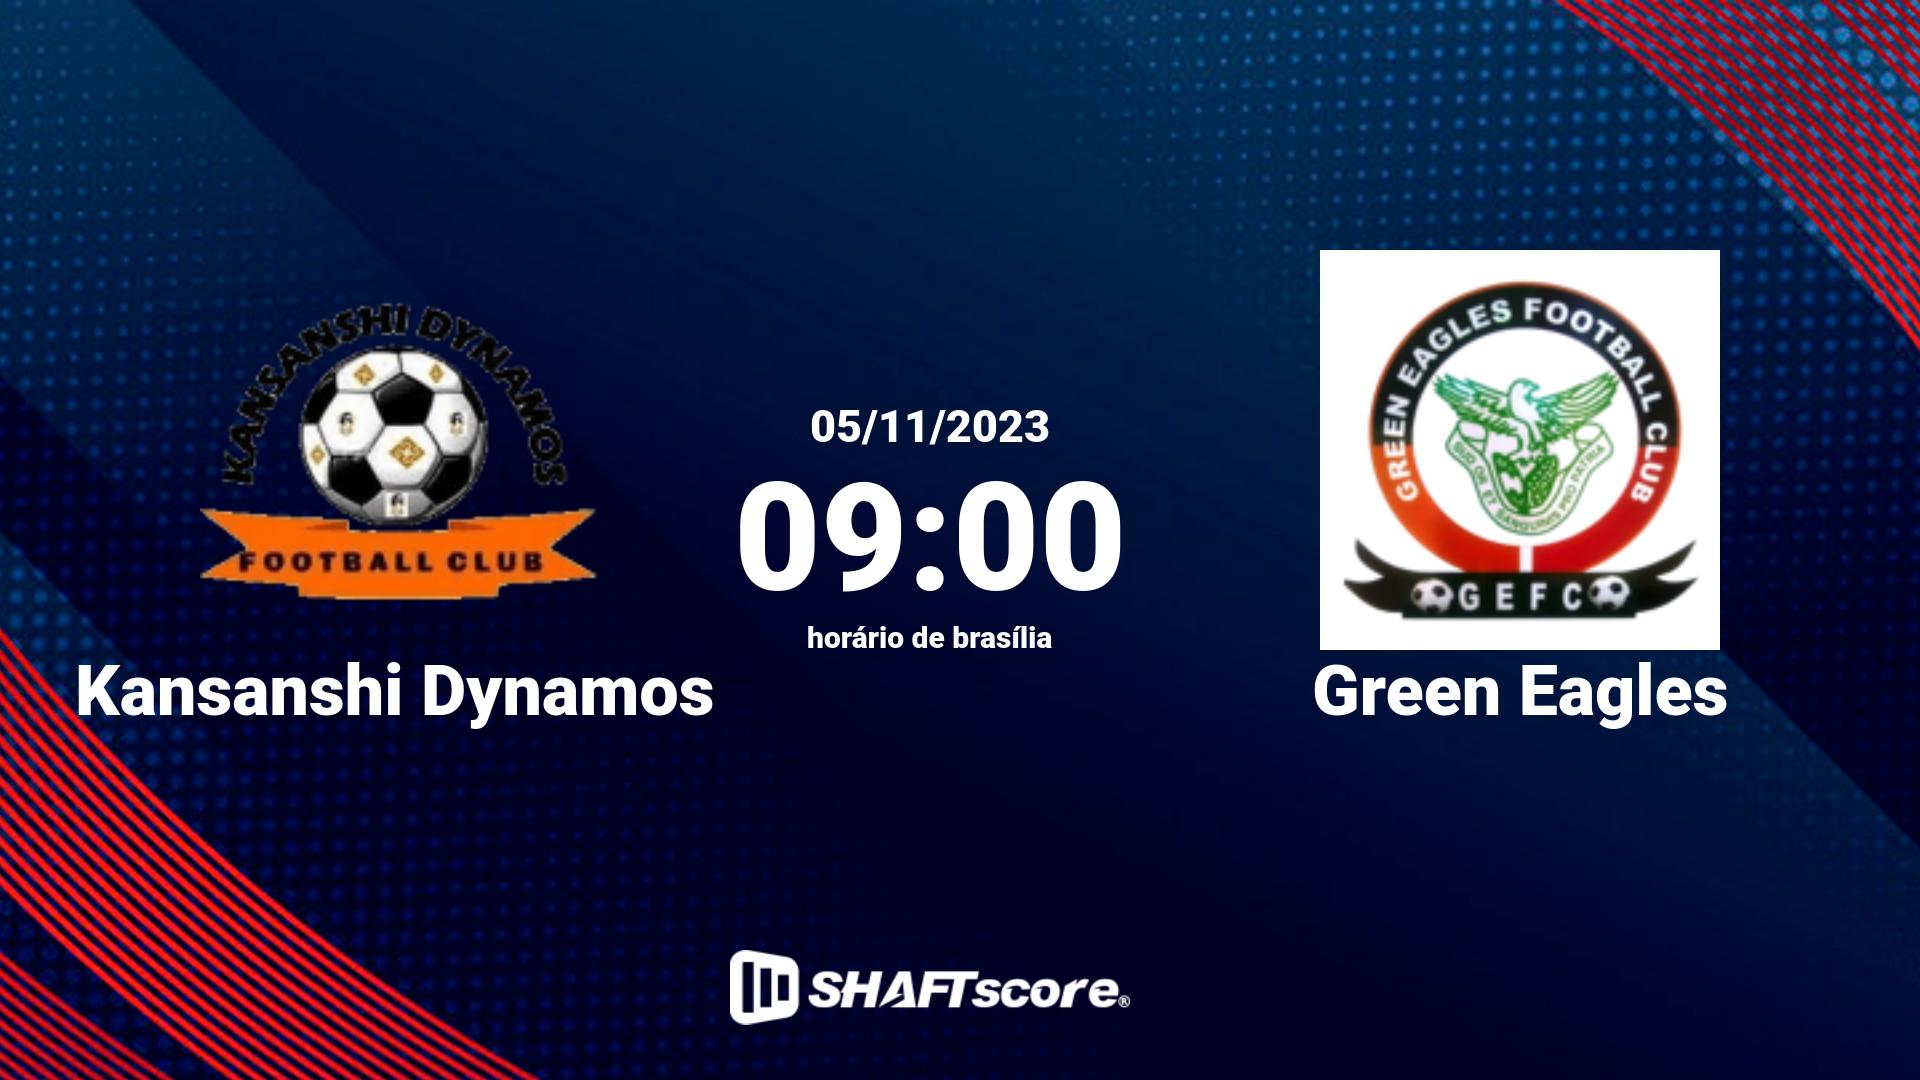 Estatísticas do jogo Kansanshi Dynamos vs Green Eagles 05.11 09:00